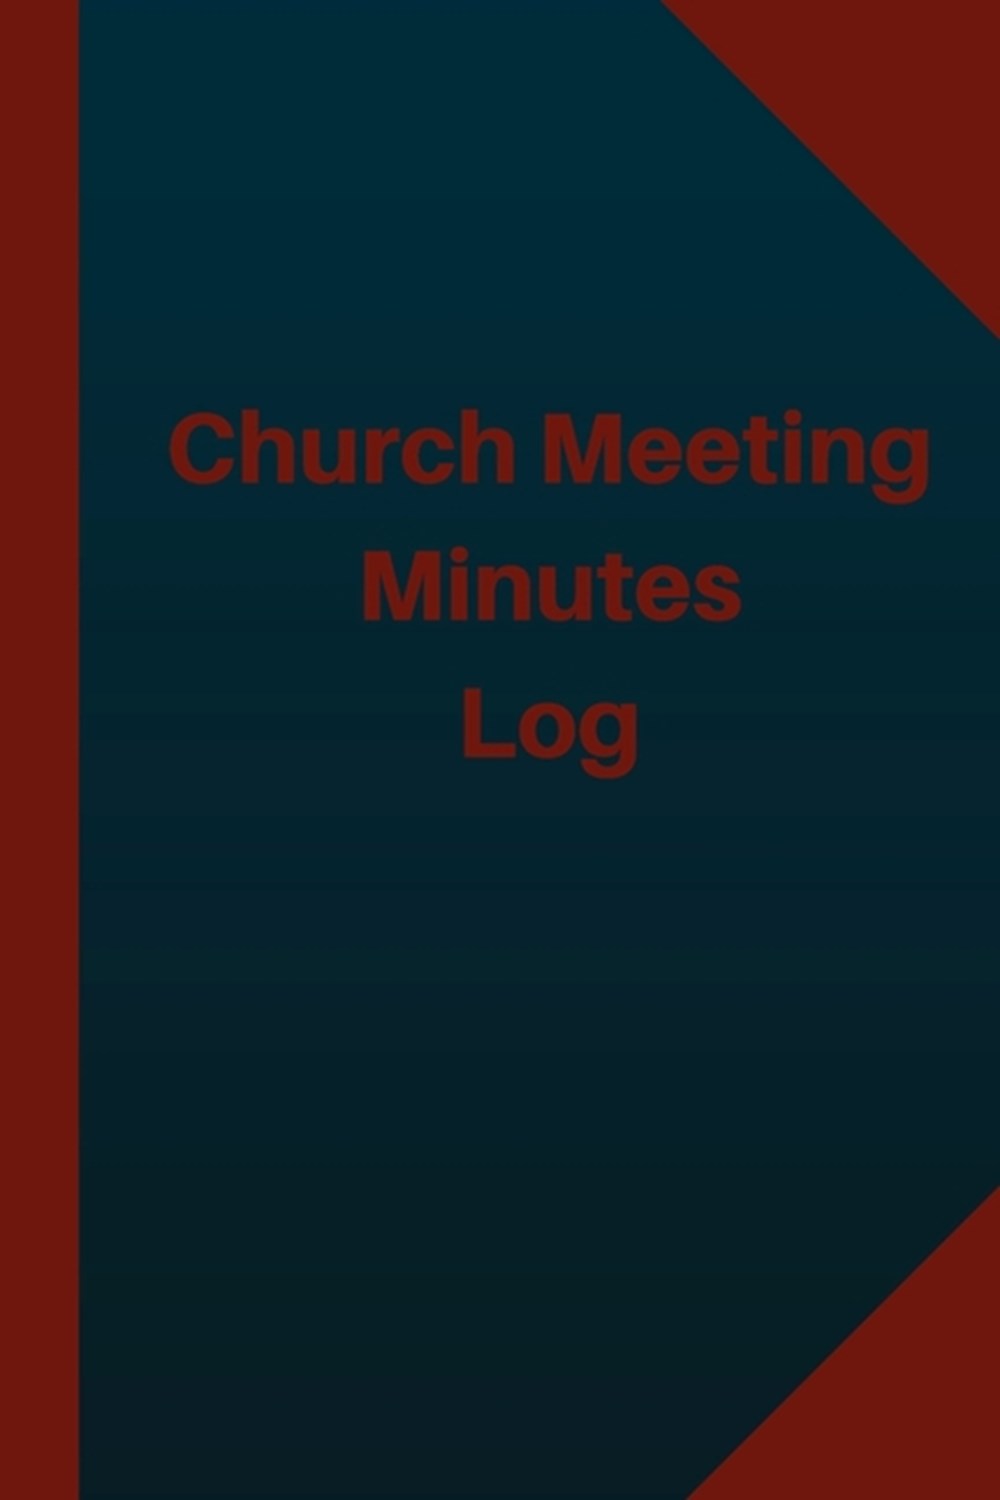 Church Meeting Minutes Log (Logbook, Journal - 124 pages 6x9 inches) Church Meeting Minutes Logbook 